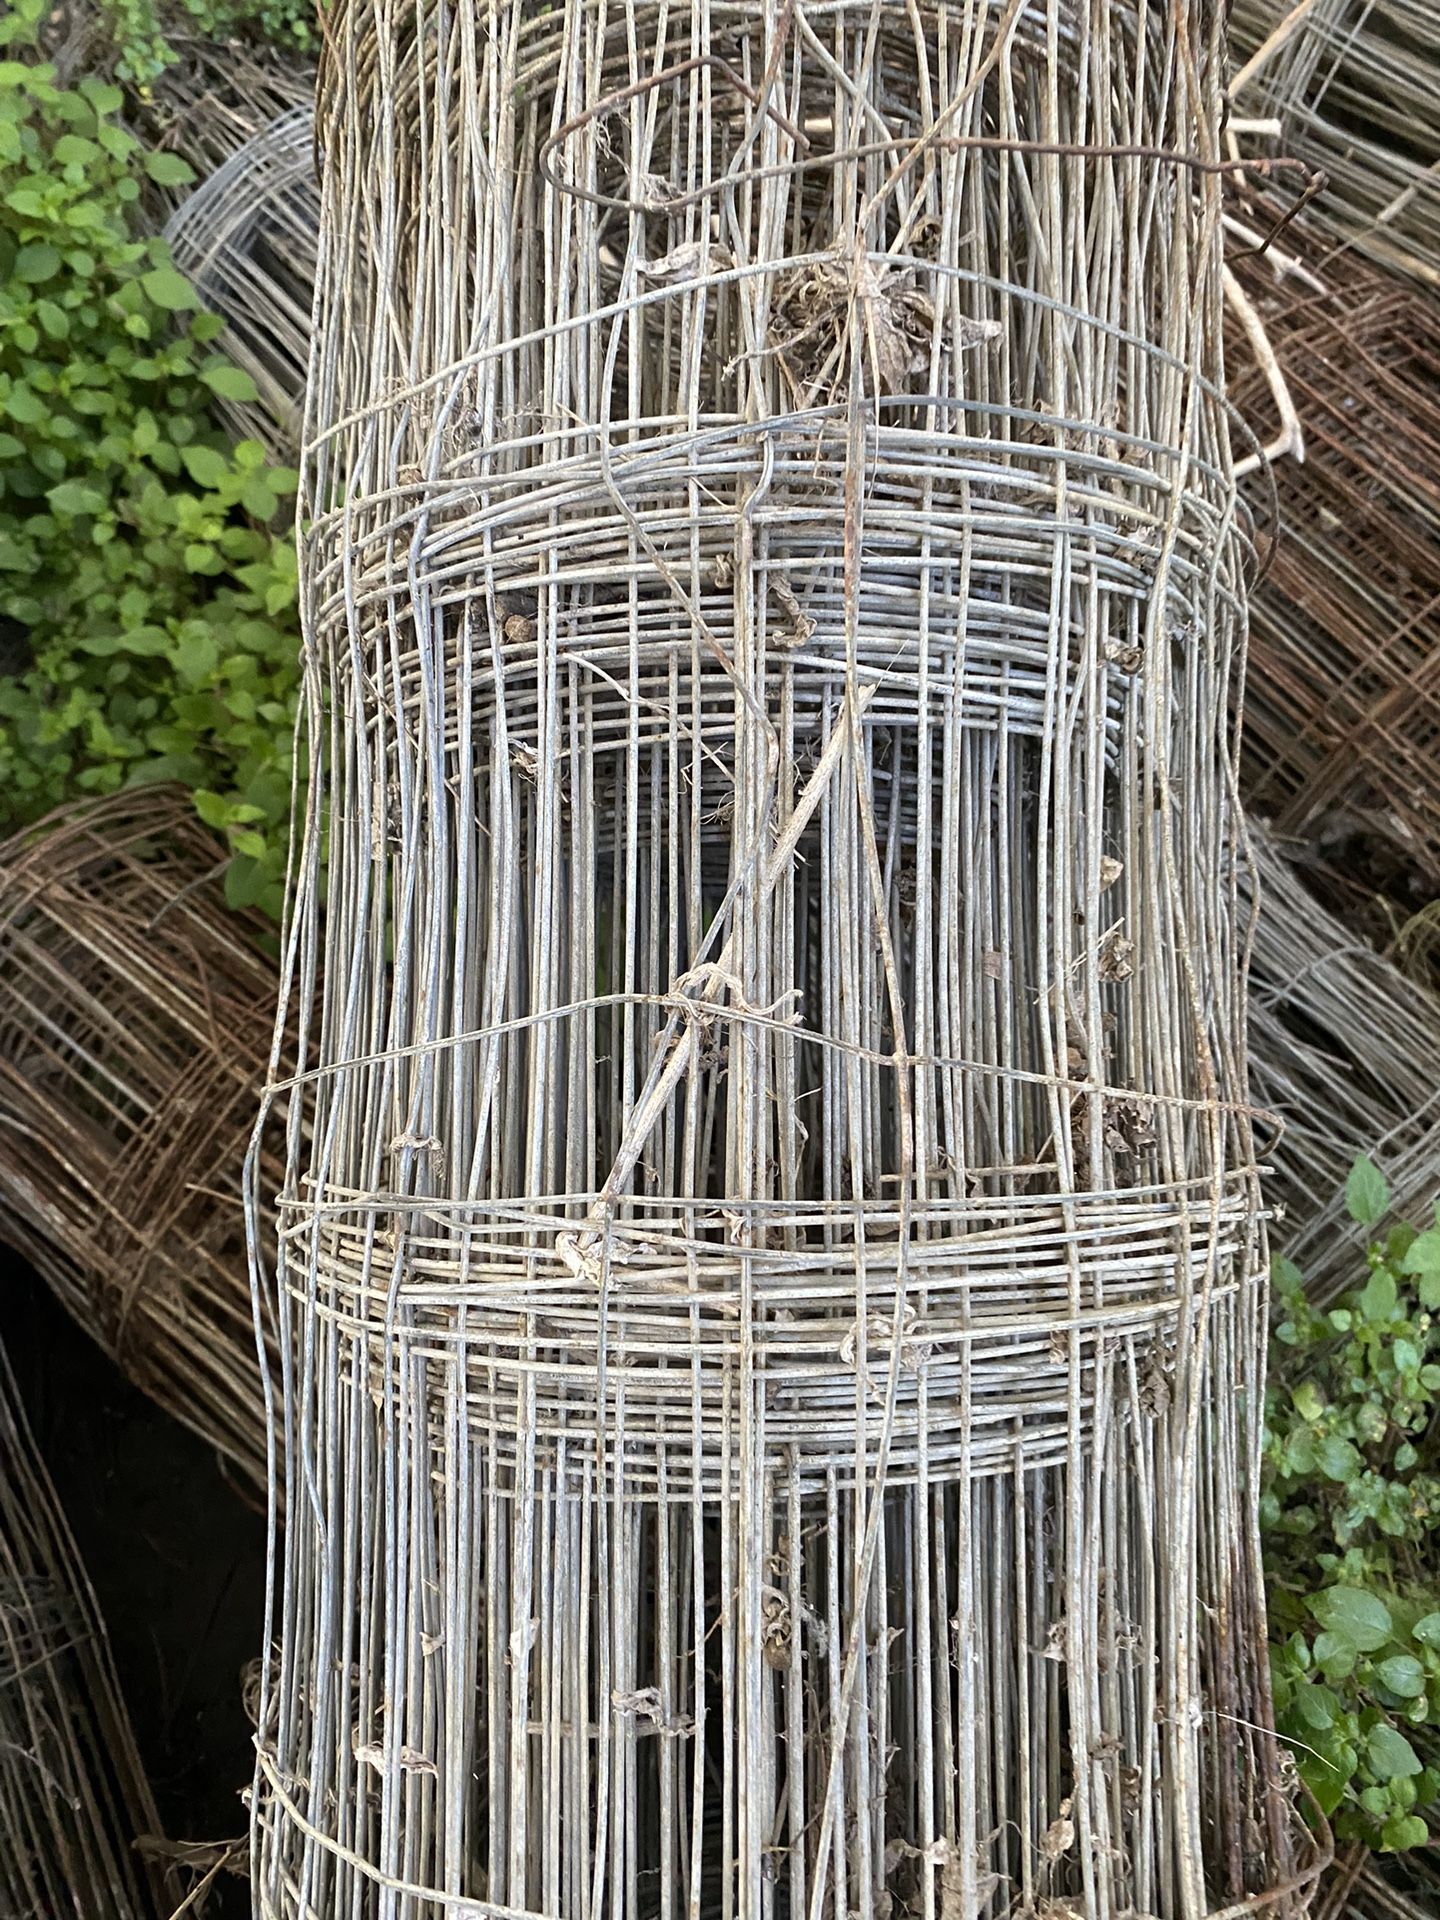 Galvanized wire, mesh